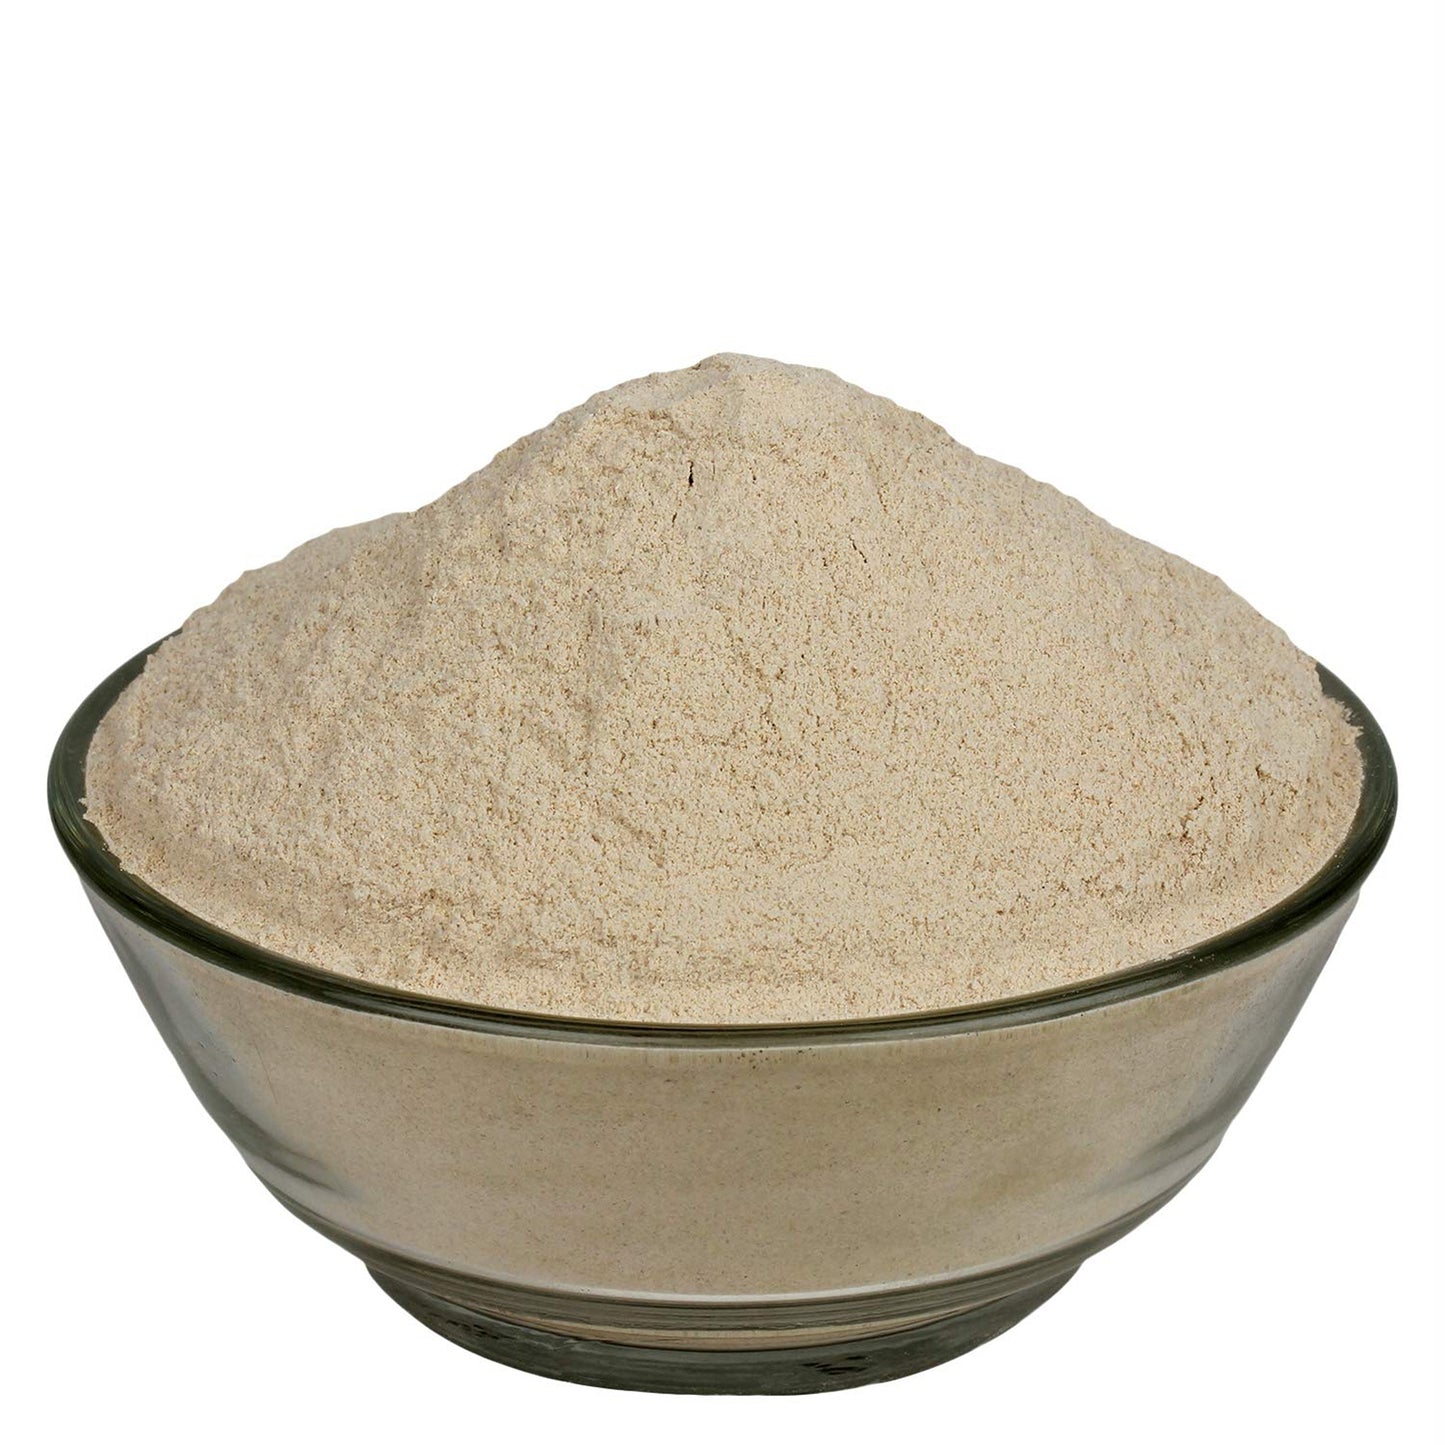 Gokhru Bada Powder - Pedalium Murex - Large Caltrops